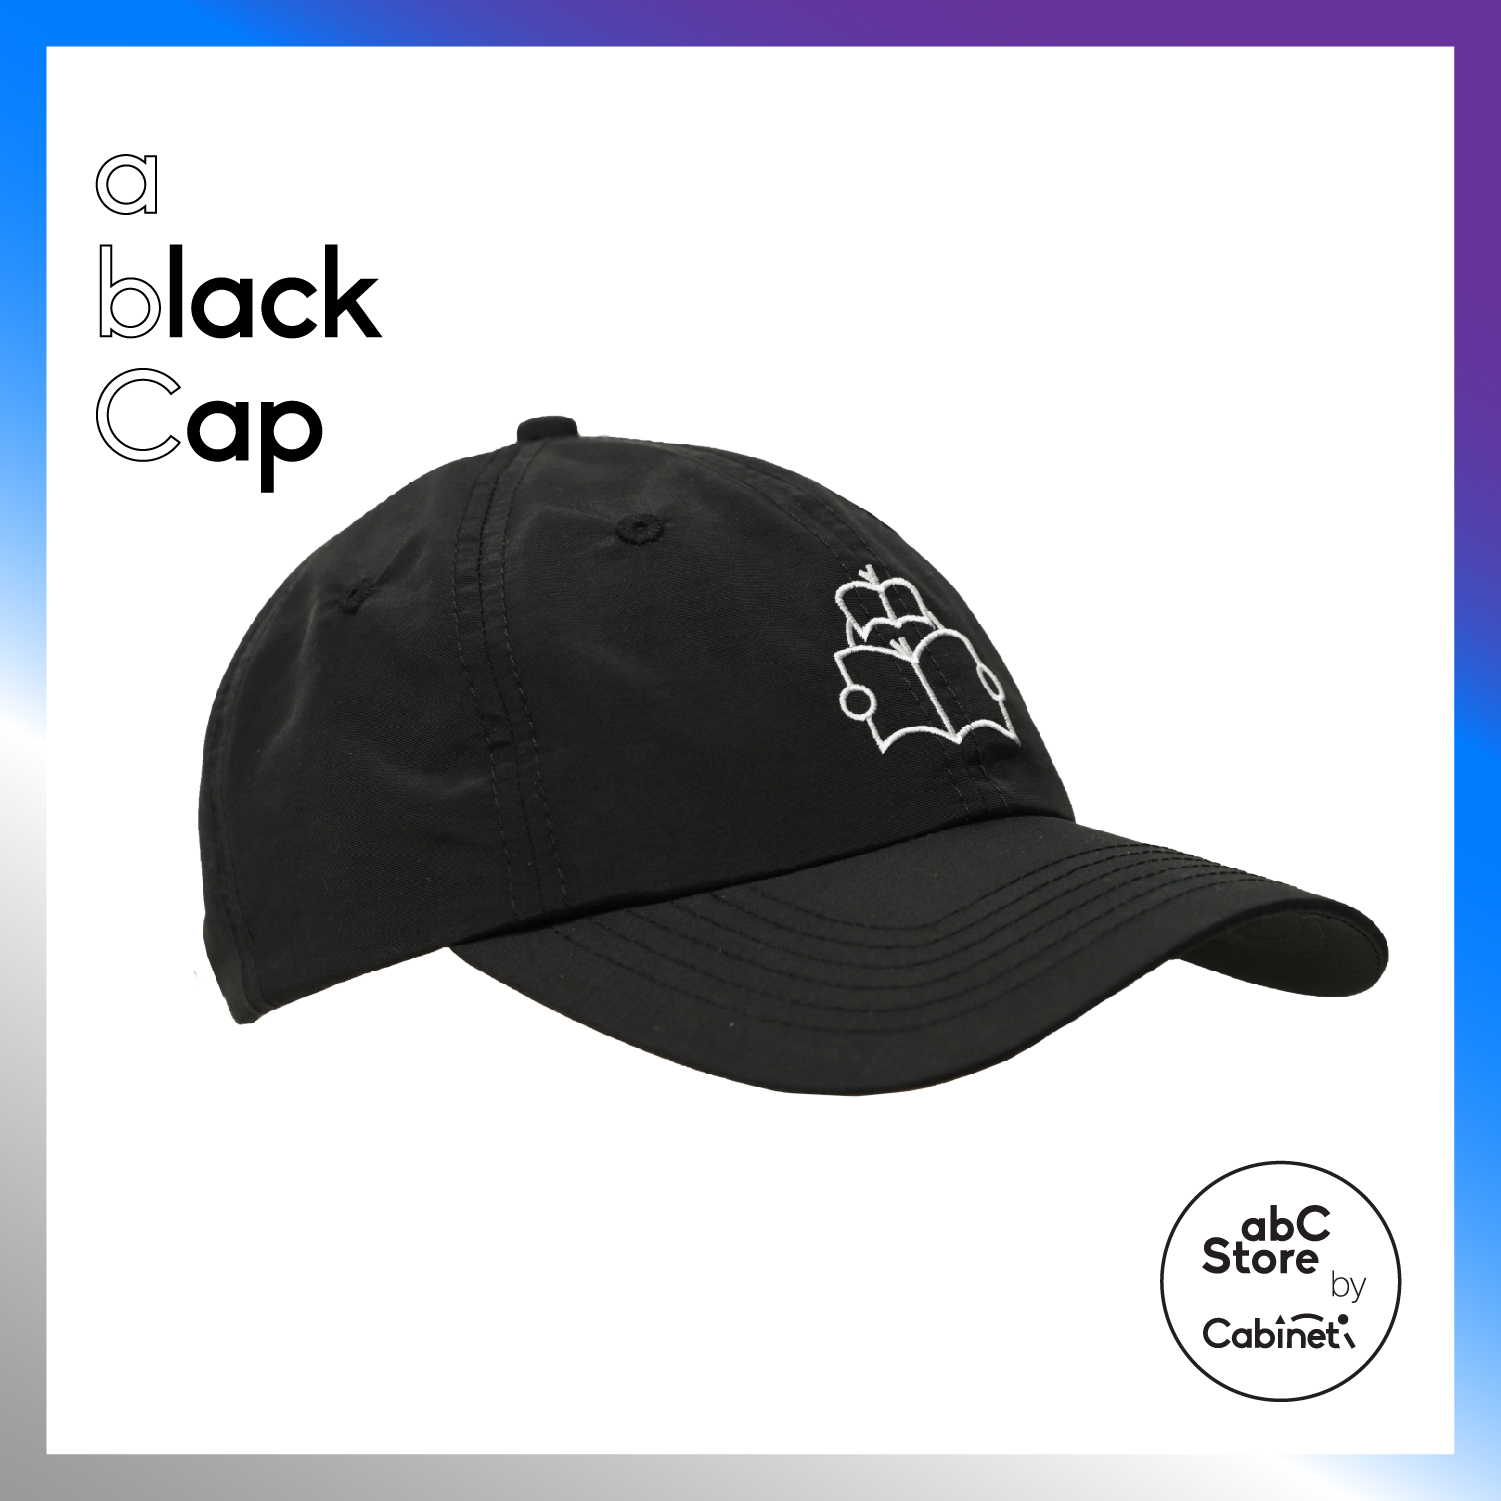 【abC Store by Cabinet】黑黑的帽子 a black Cap